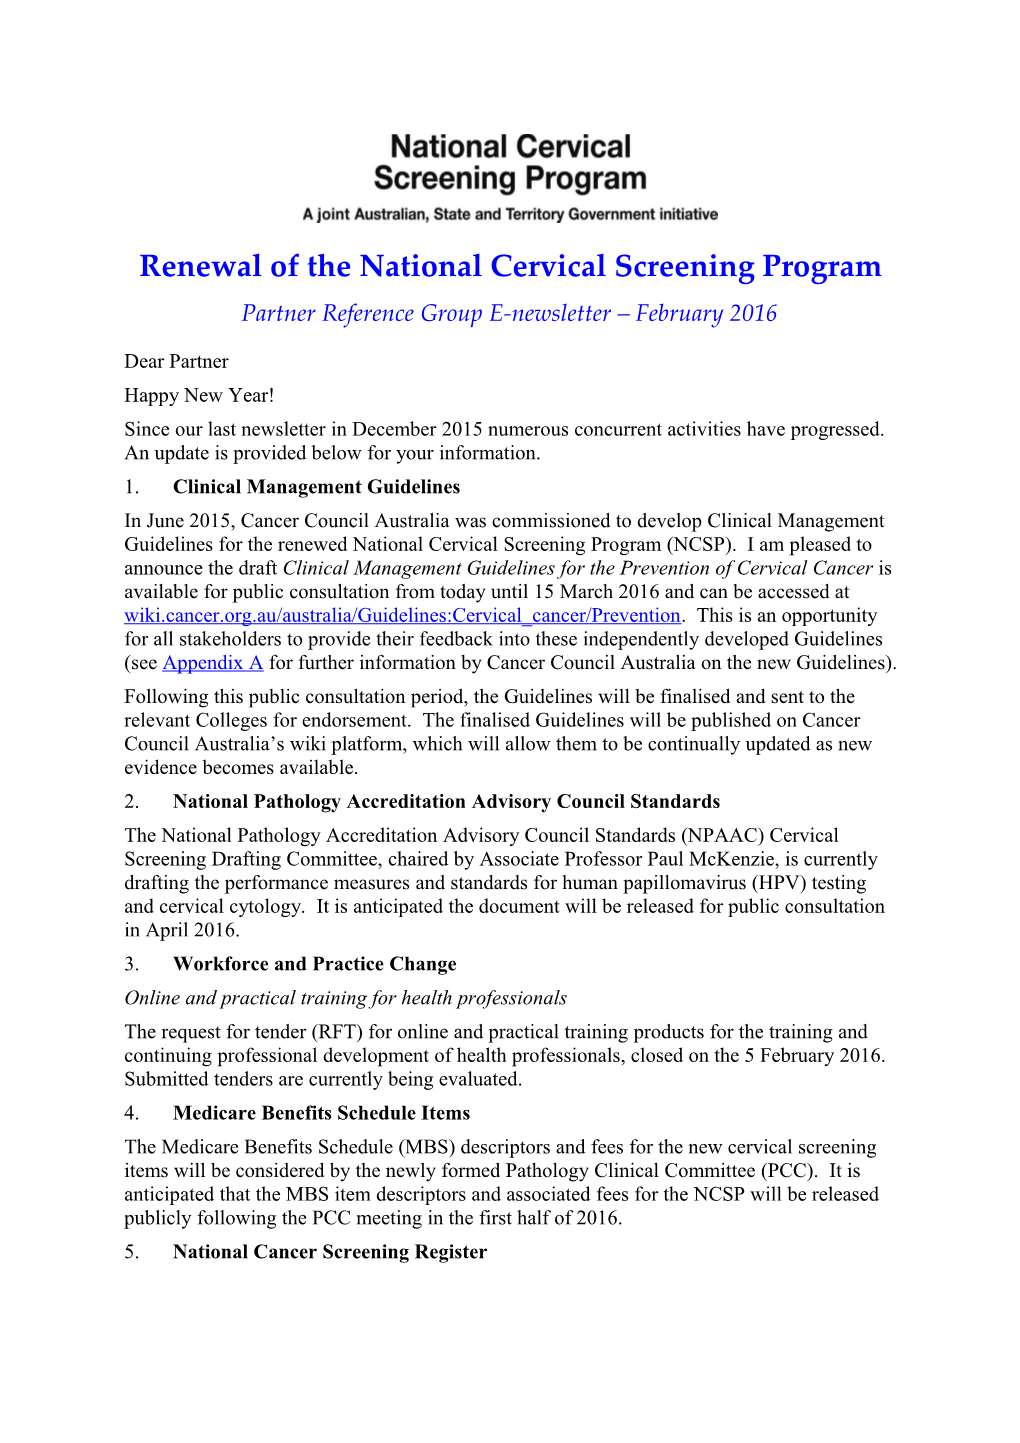 E-Newsletter - Renewal of the National Cervical Screening Program